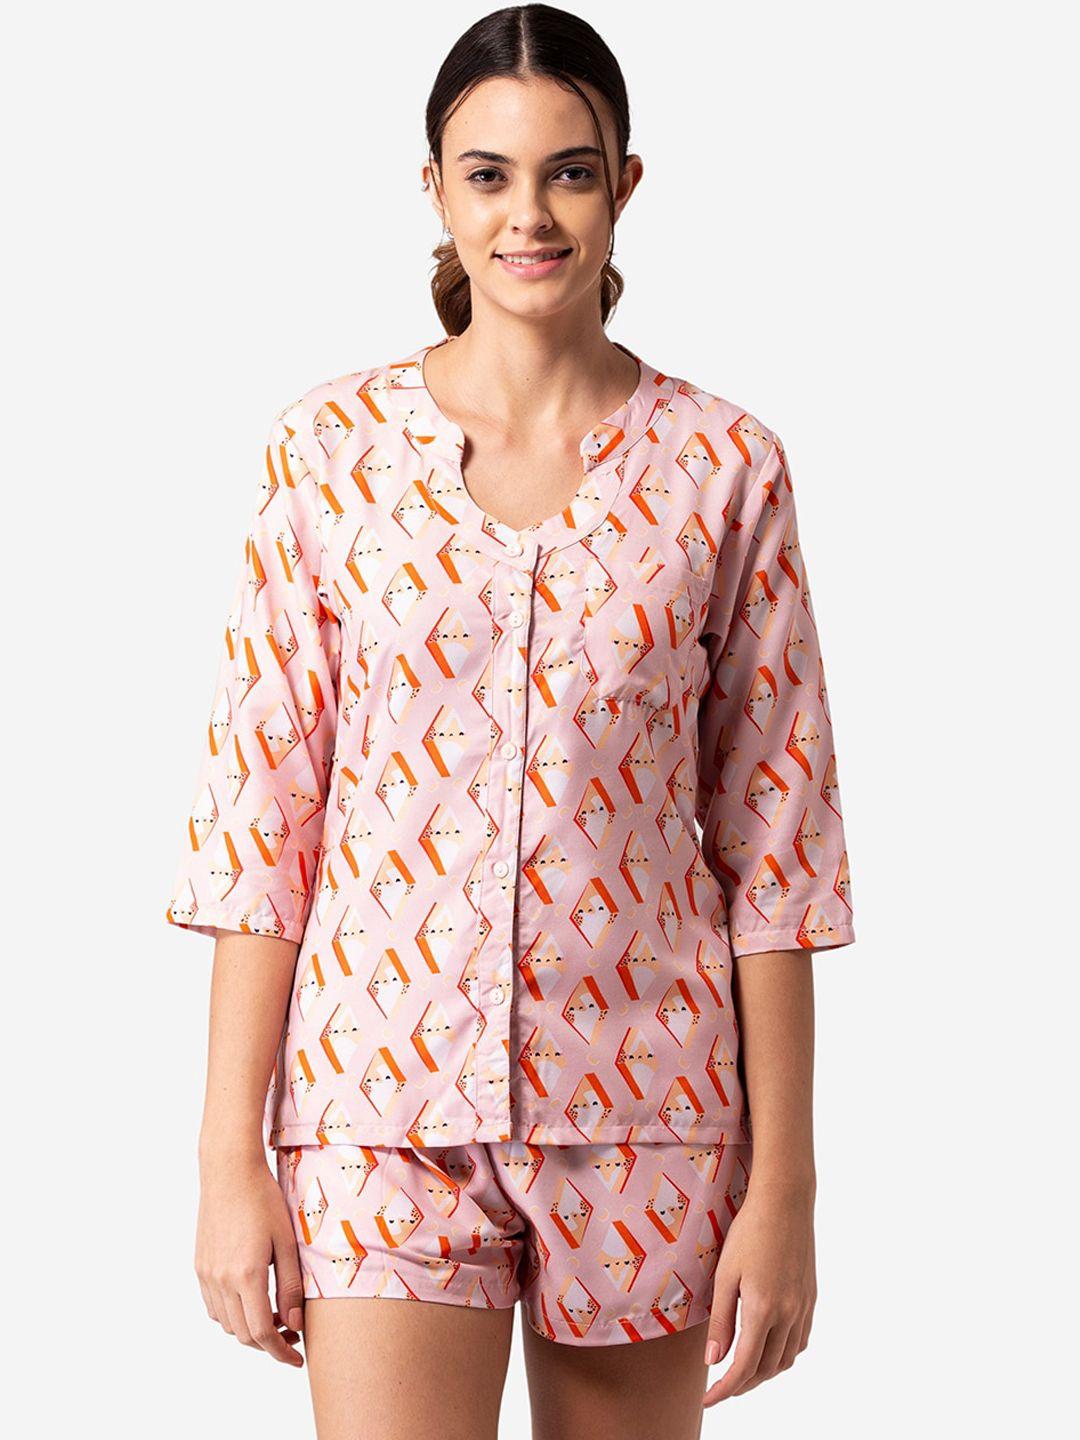 bellofox-women-peach-coloured-&-orange-printed-night-suit